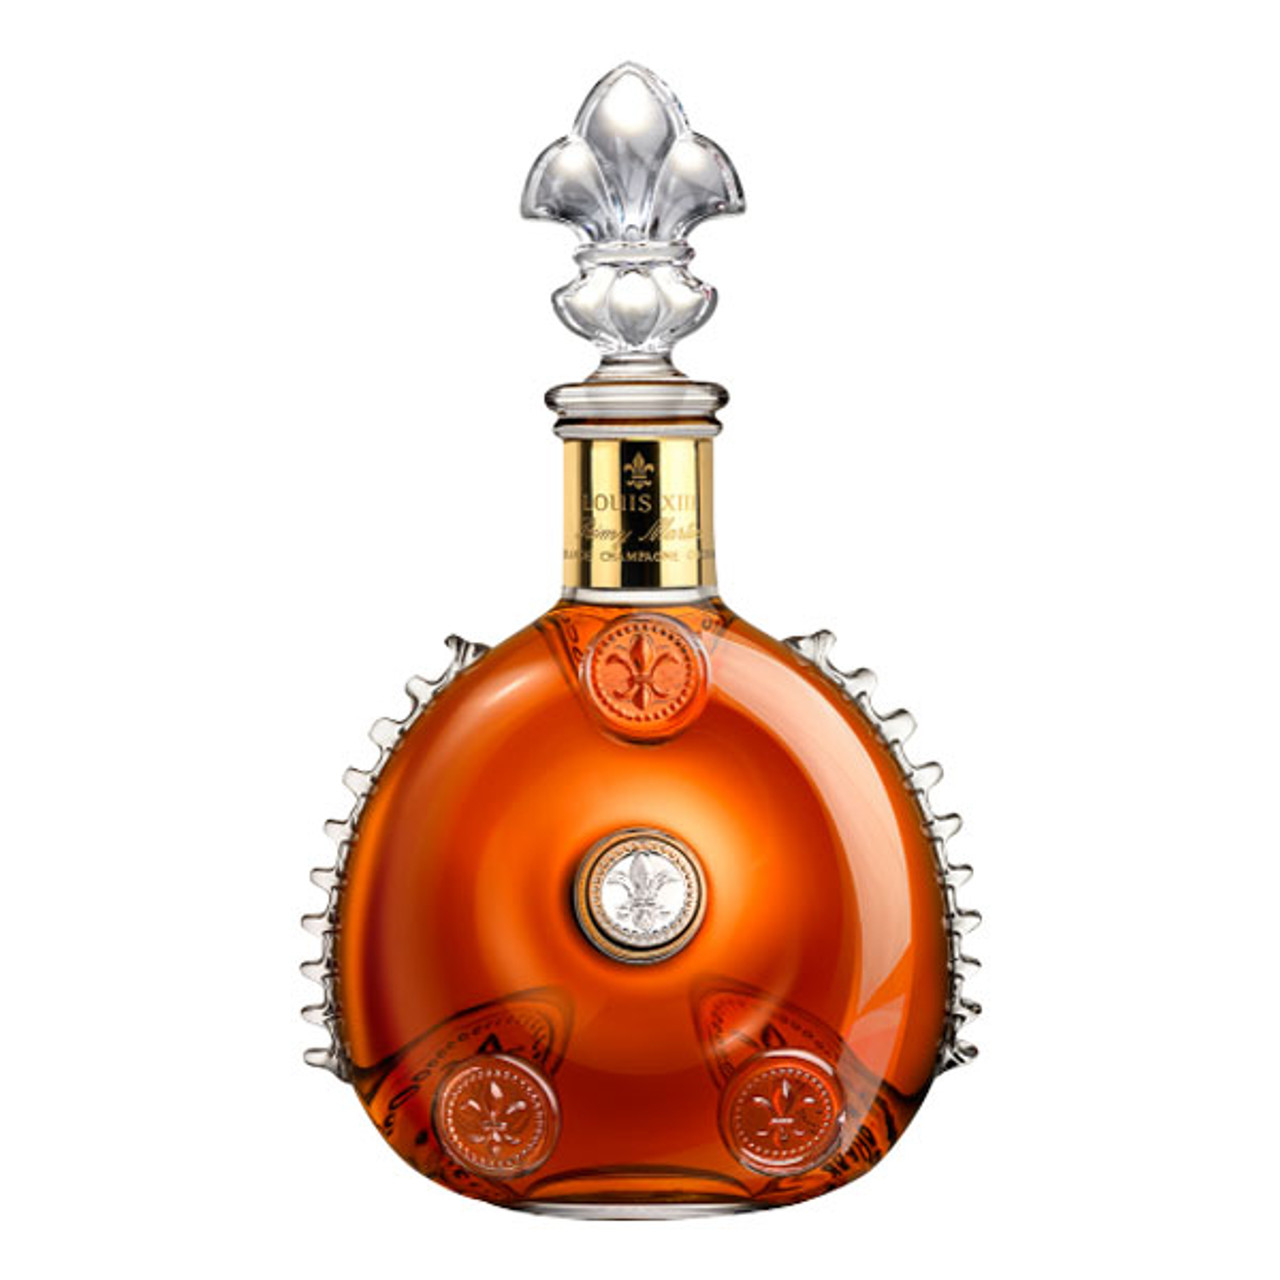 Buy Remy Martin Louis XIII Cognac at Vintage-Liquors